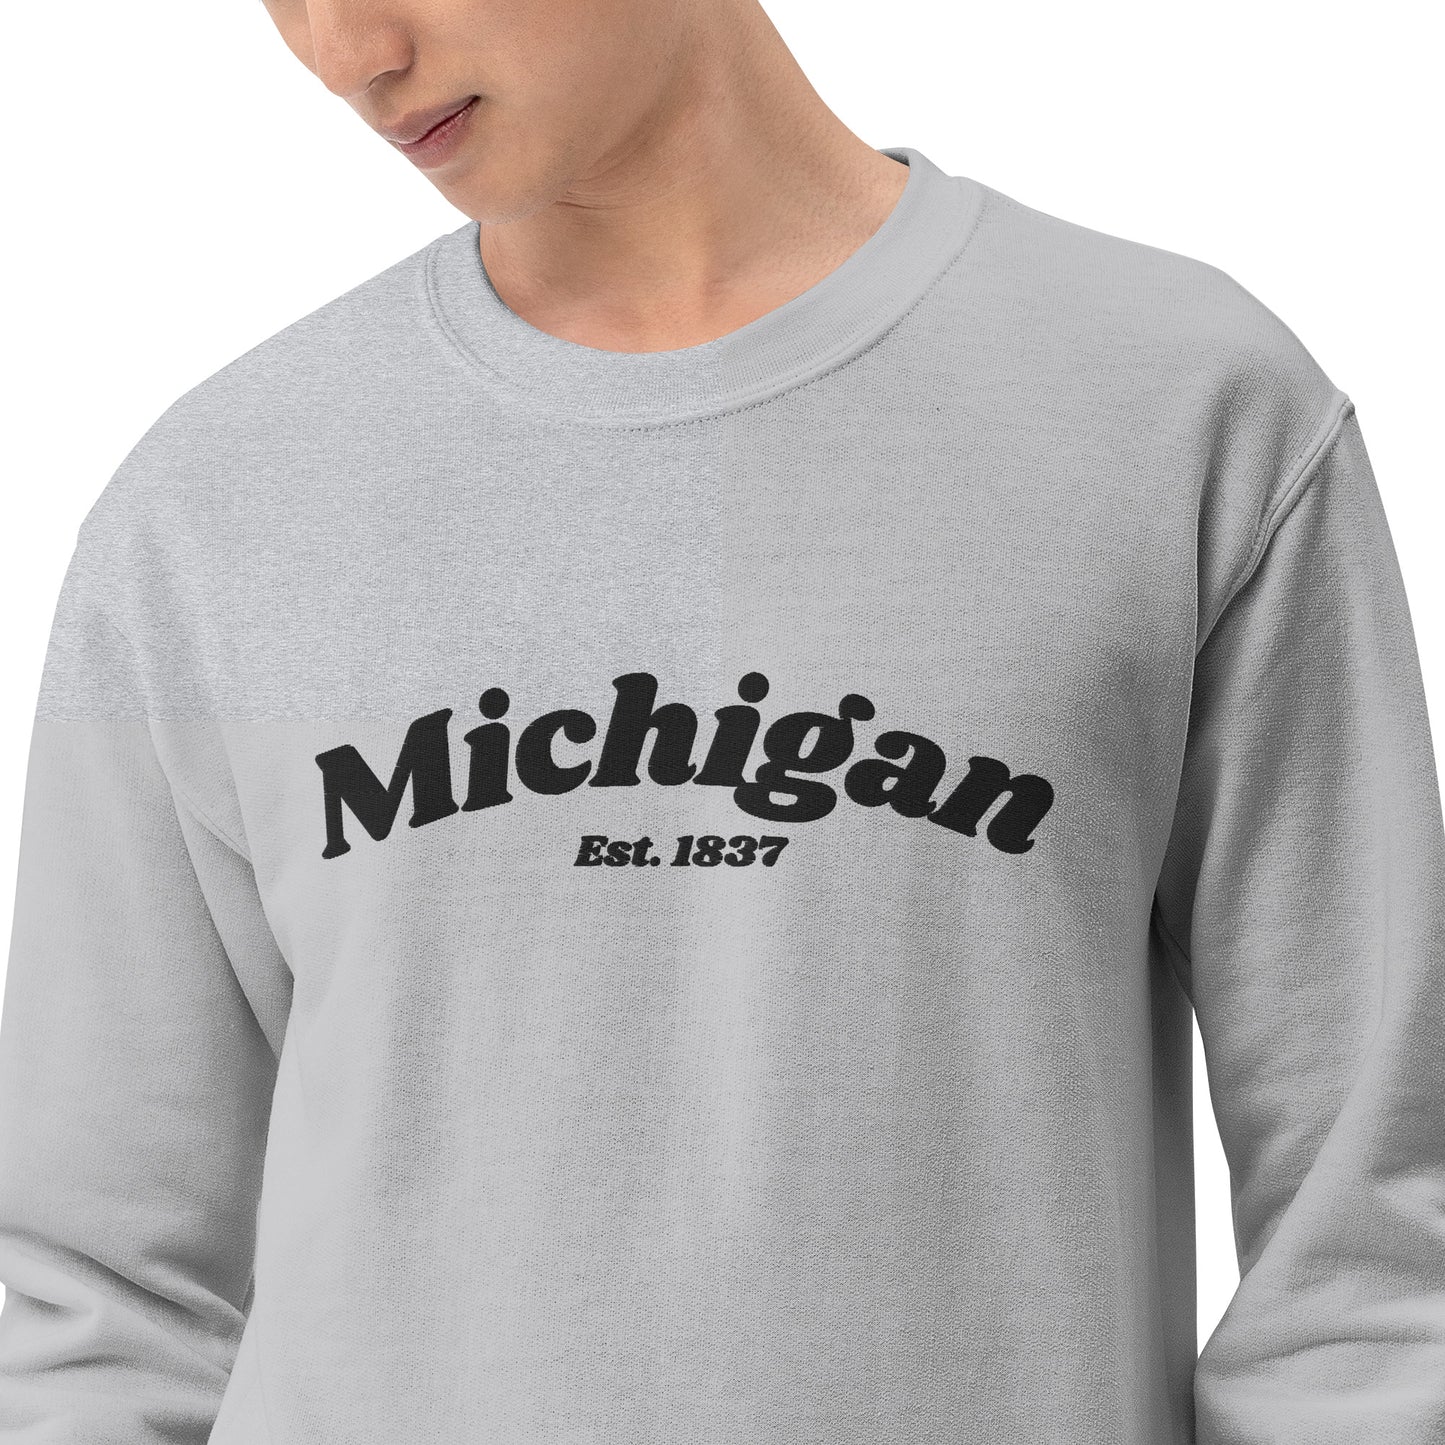 Michigan 1837 Embroidered Sweatshirt